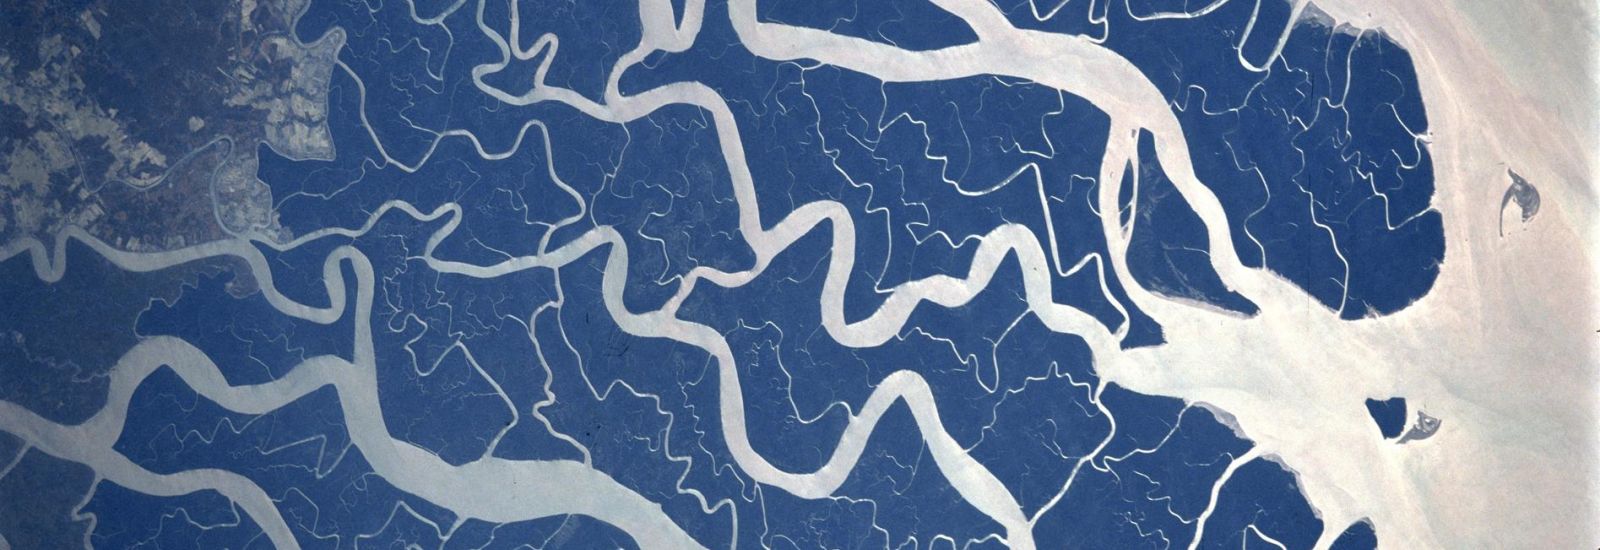 Satellite image of Ganges River delta showing tributaries branching off into landmass